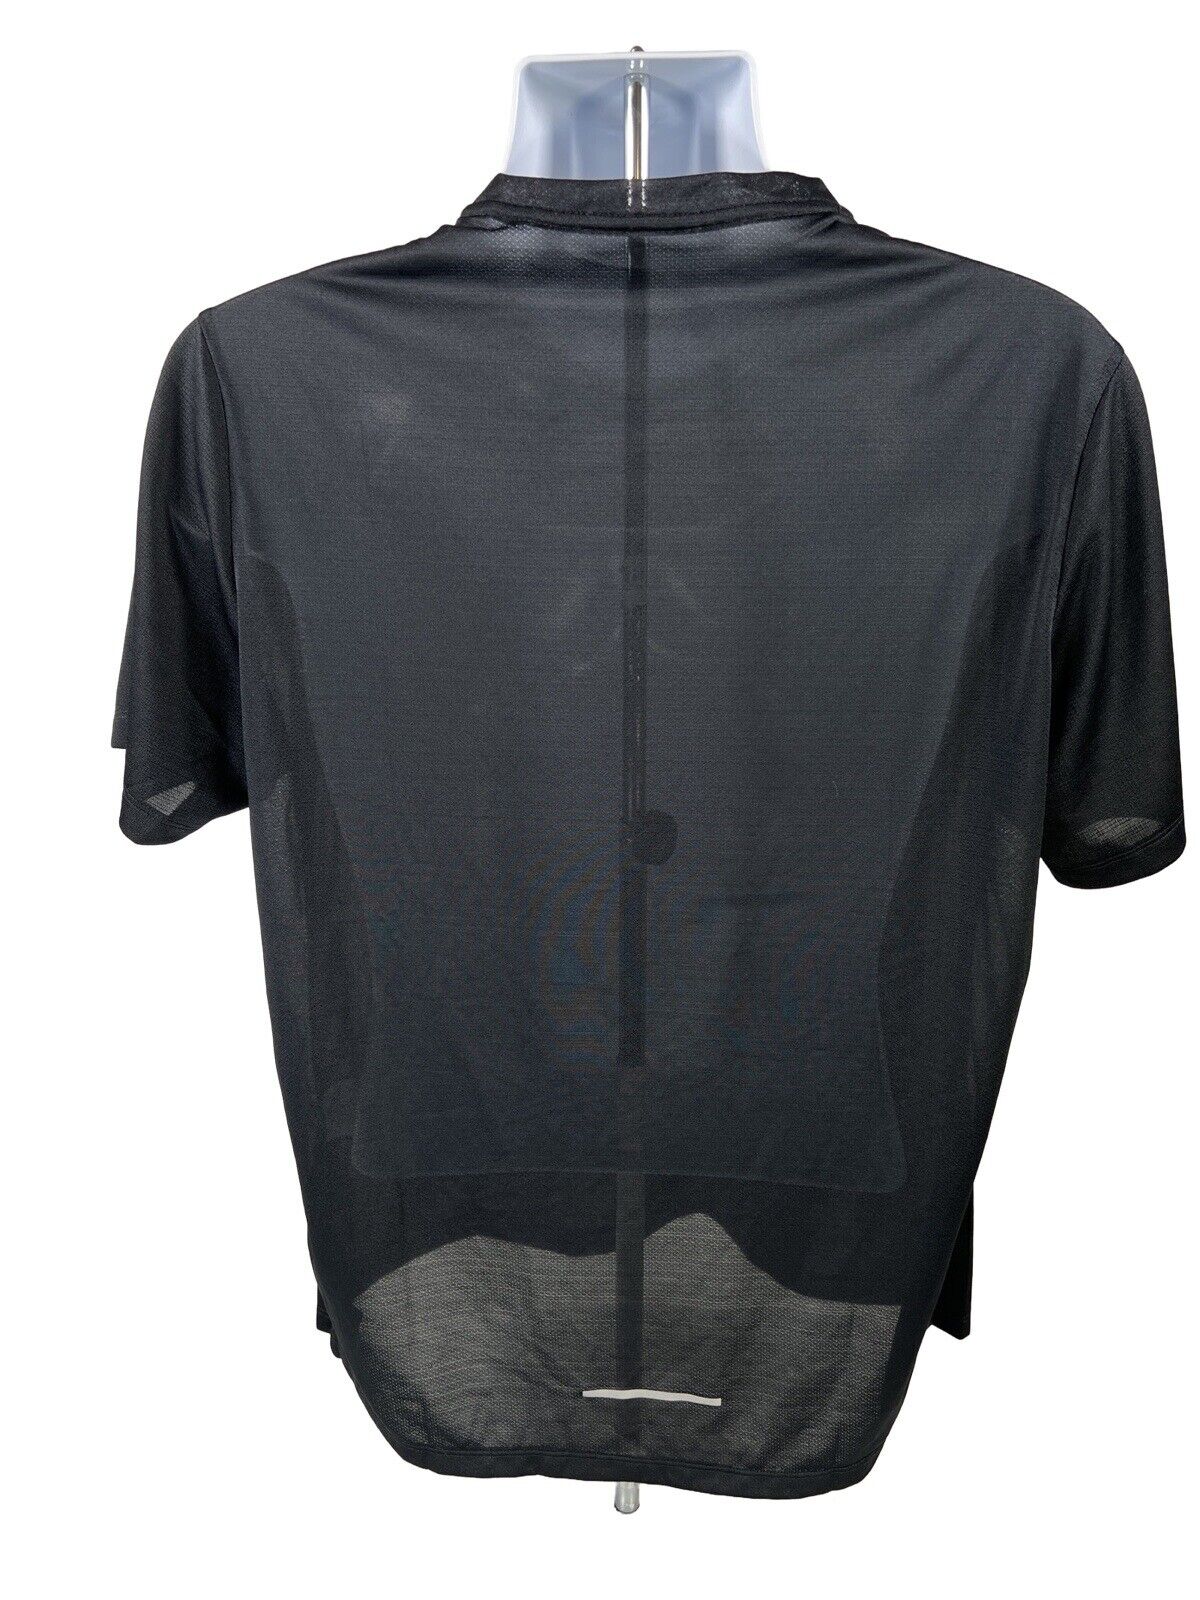 Nike Men's Black Miler Dri-Fit Running Short Sleeve Shirt - L